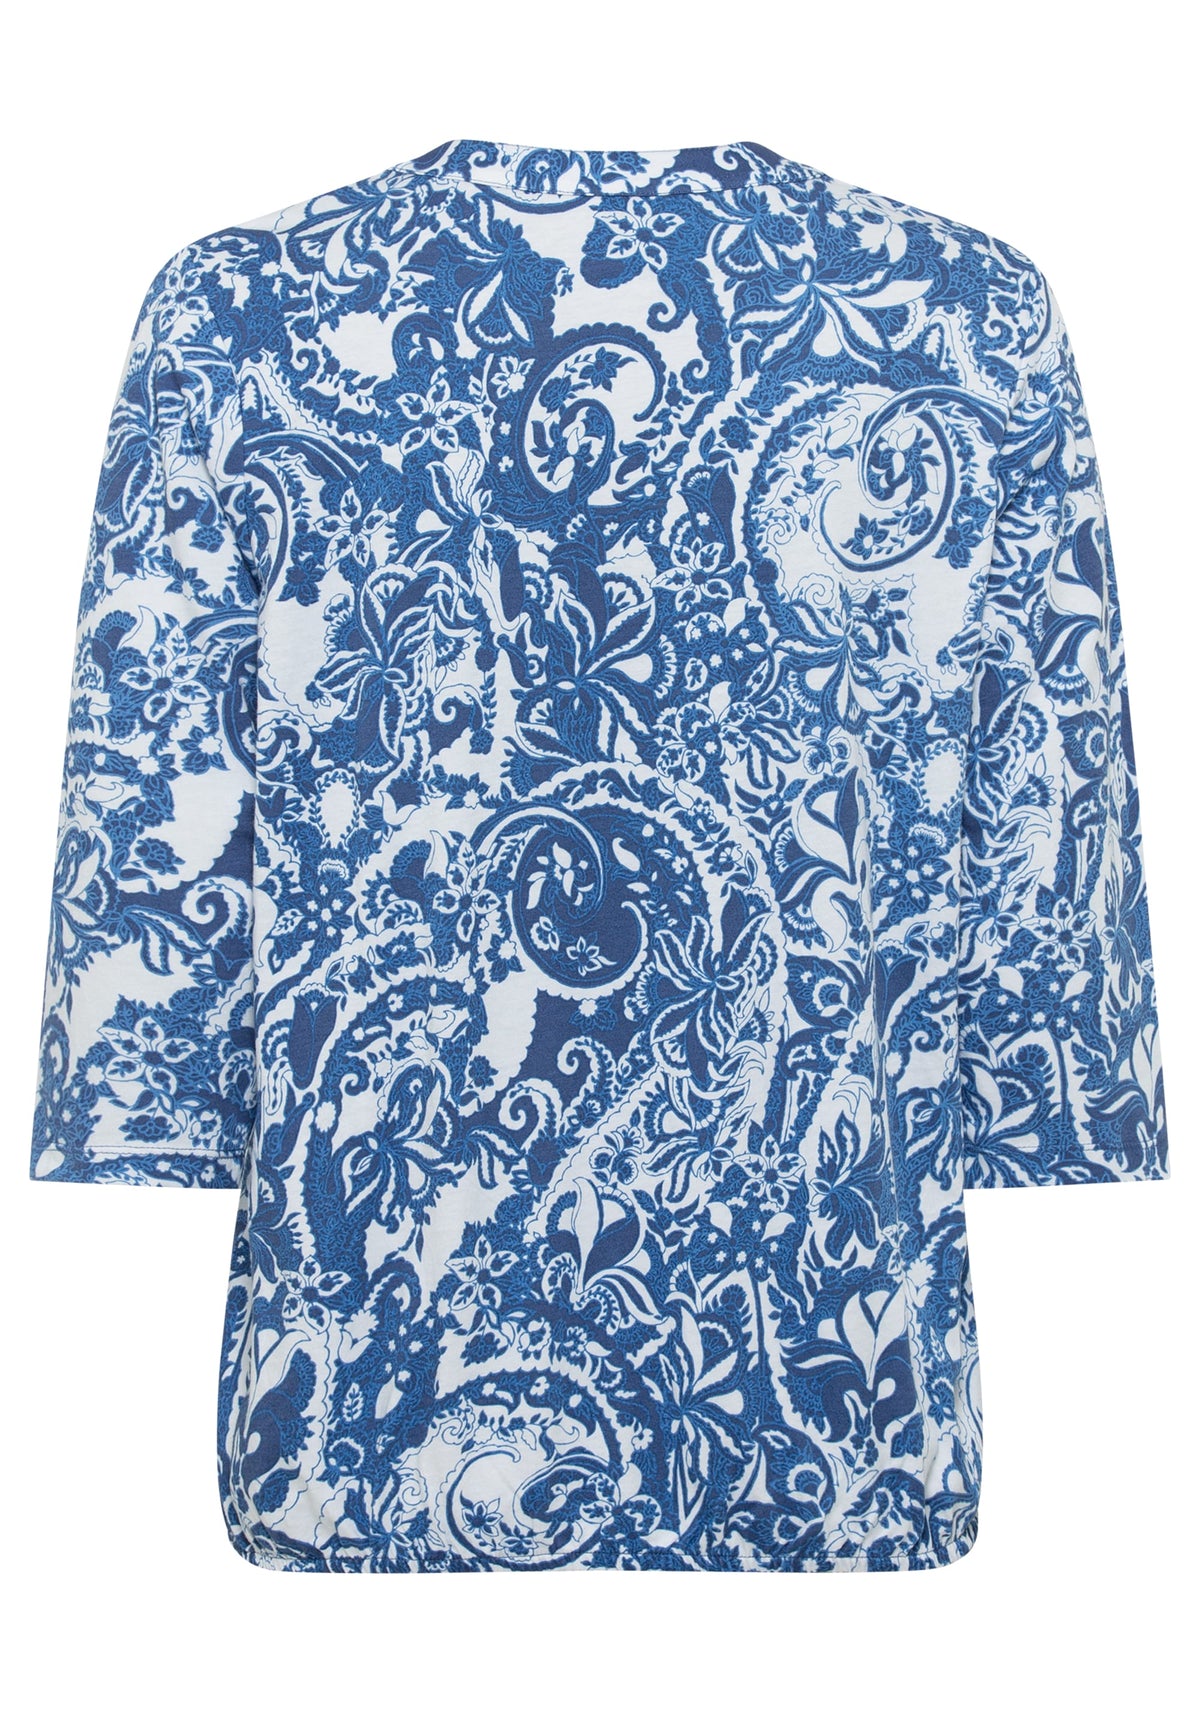 Short Sleeve Paisley Floral Print Tunic T-Shirt containing TENCEL™ Modal